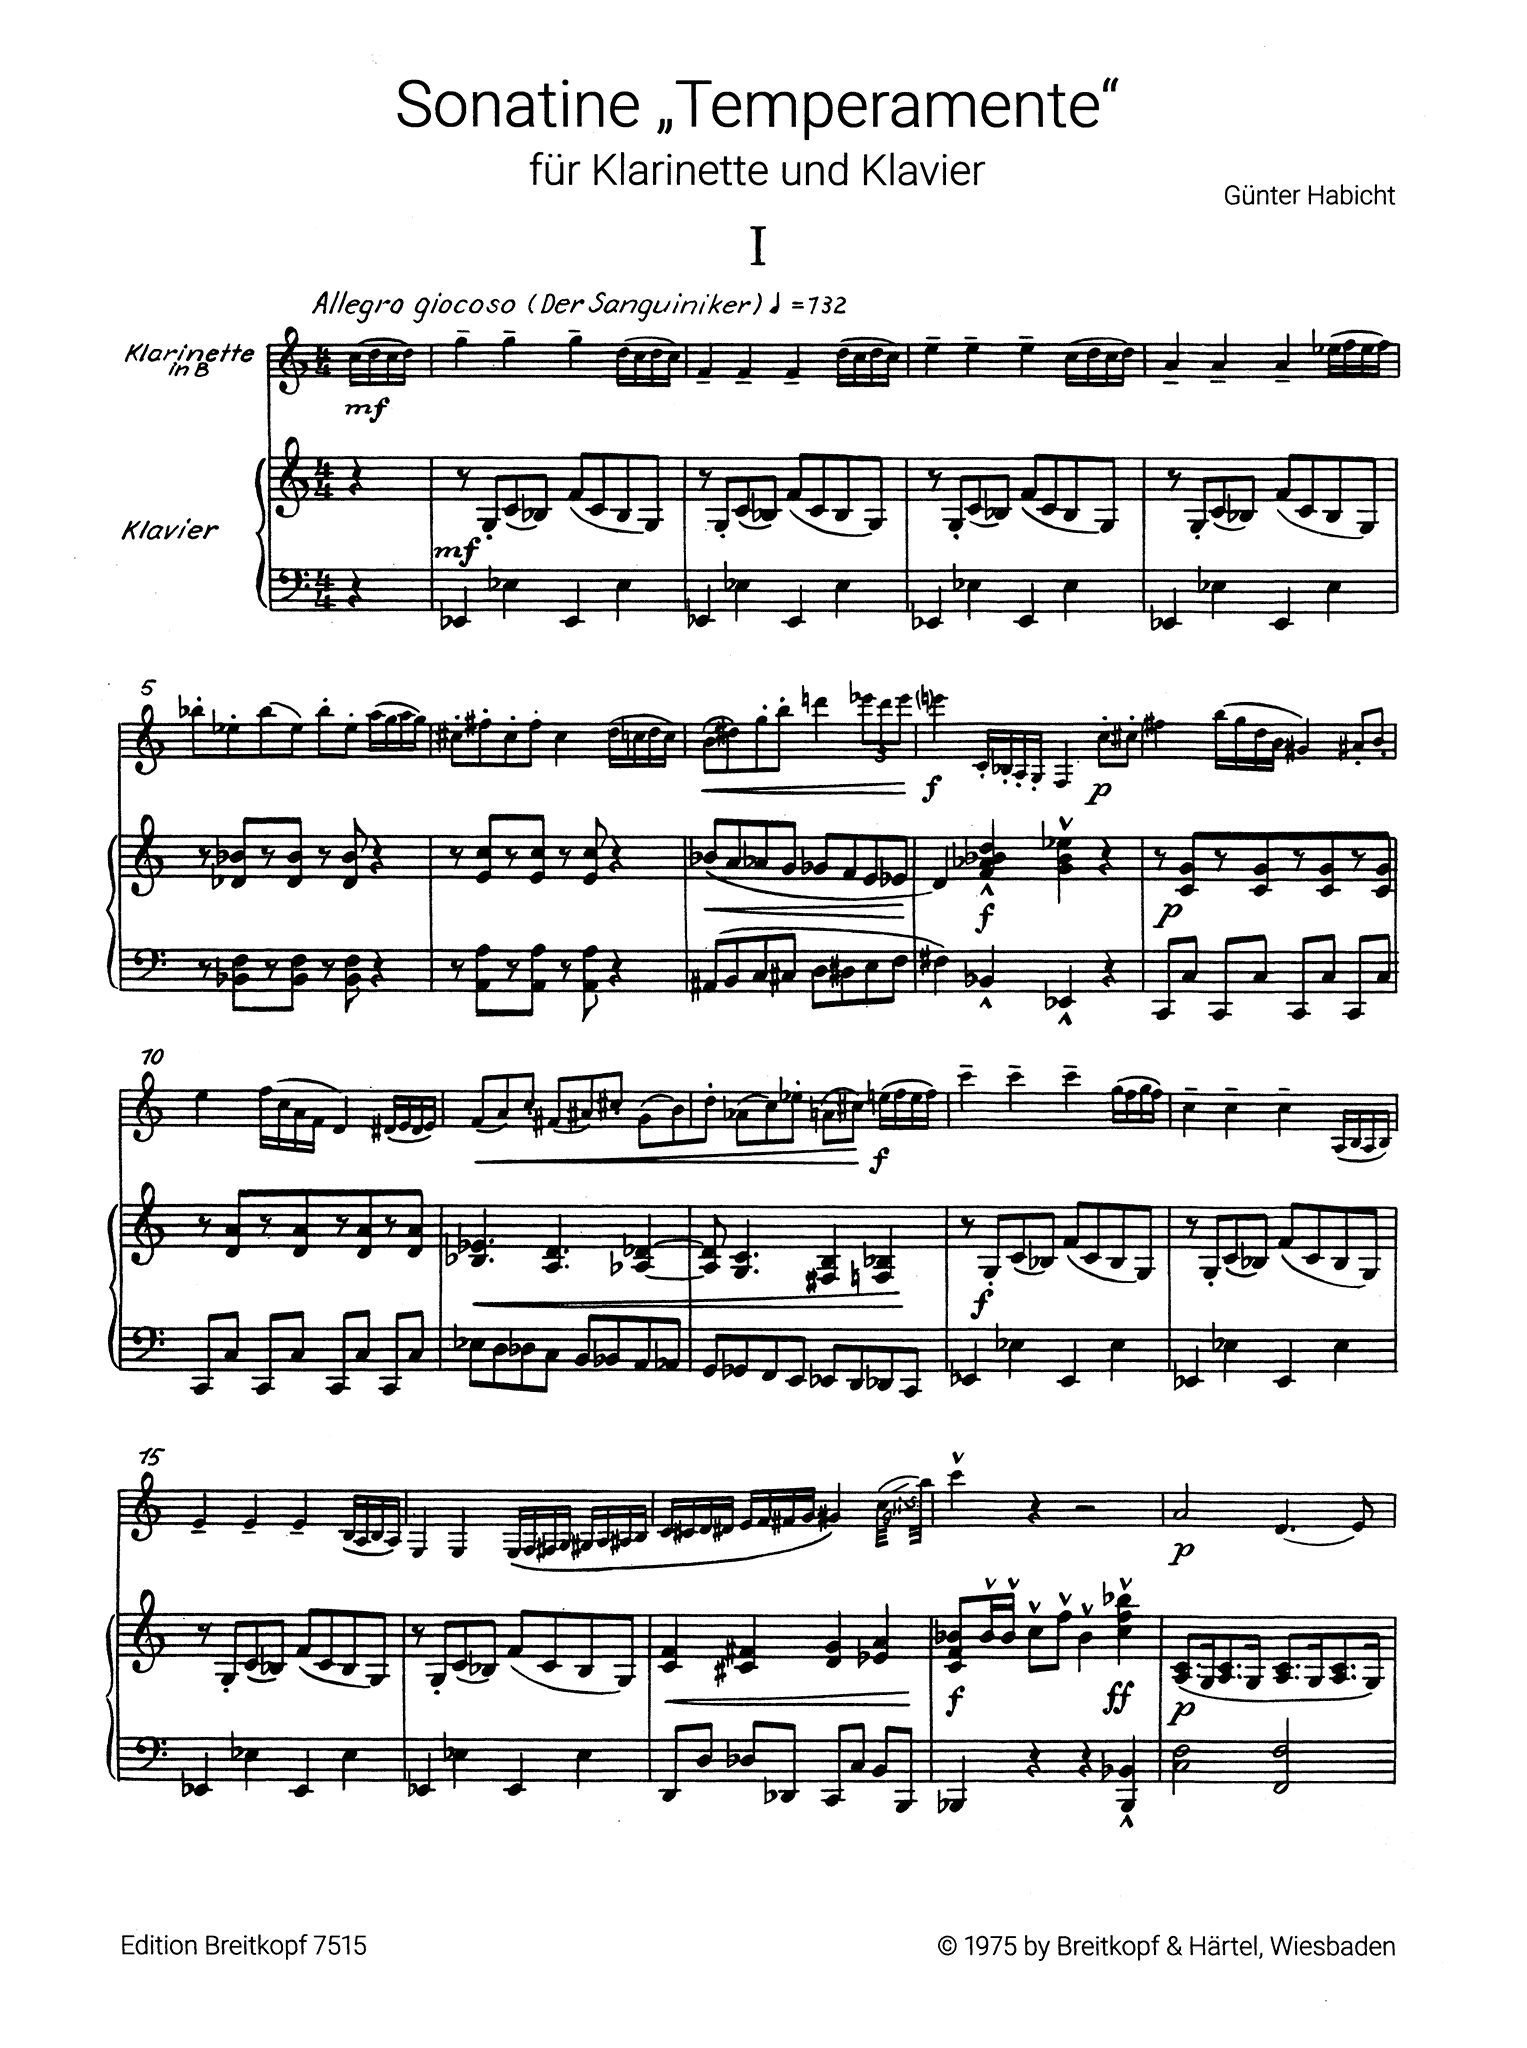 Habicht Clarinet Sonatina Temperamente - movement 1